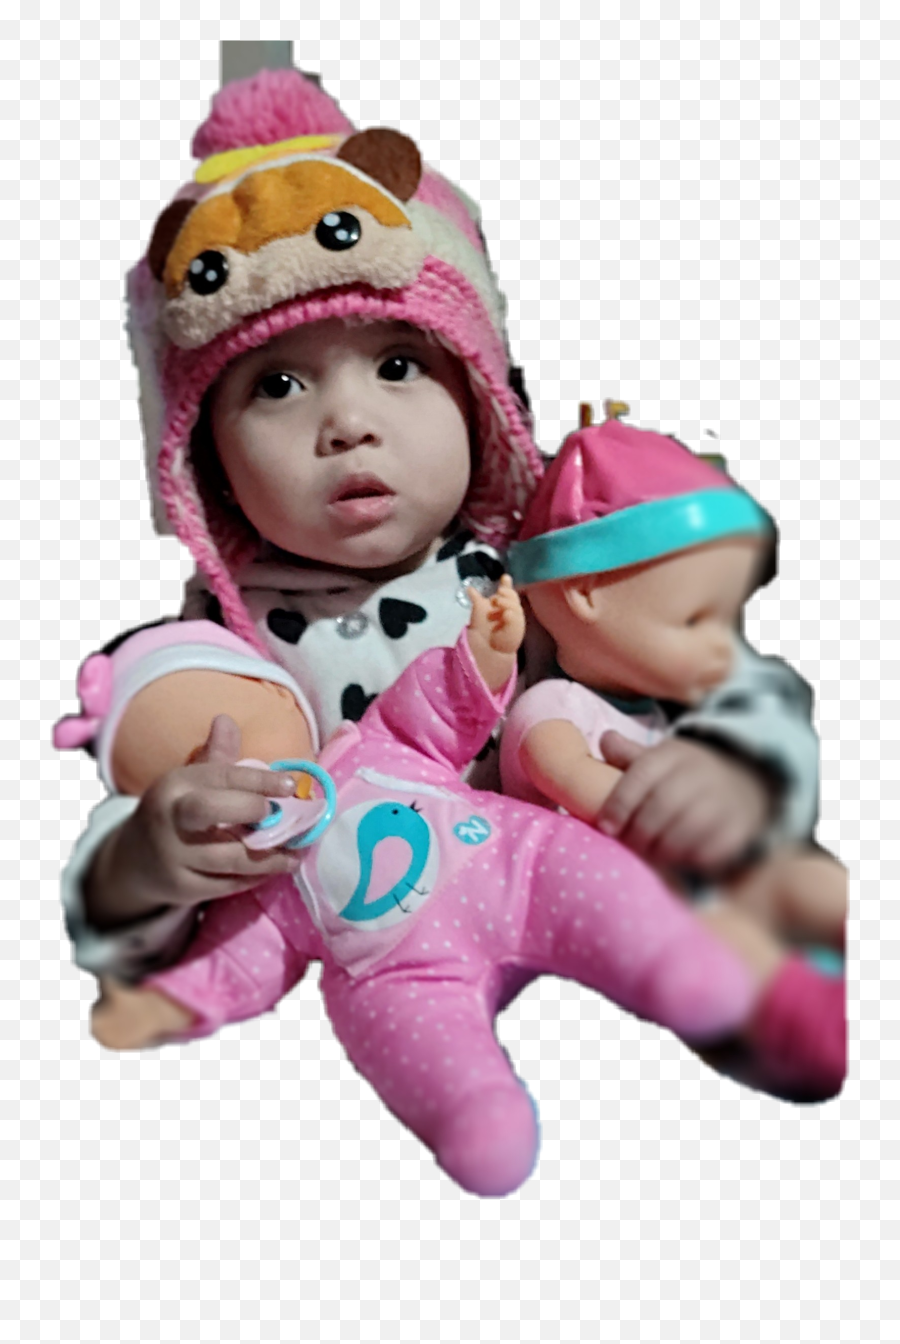 The Most Edited Pachi Picsart - Baby Looking Curiously At Things Emoji,Pachimari Emoji